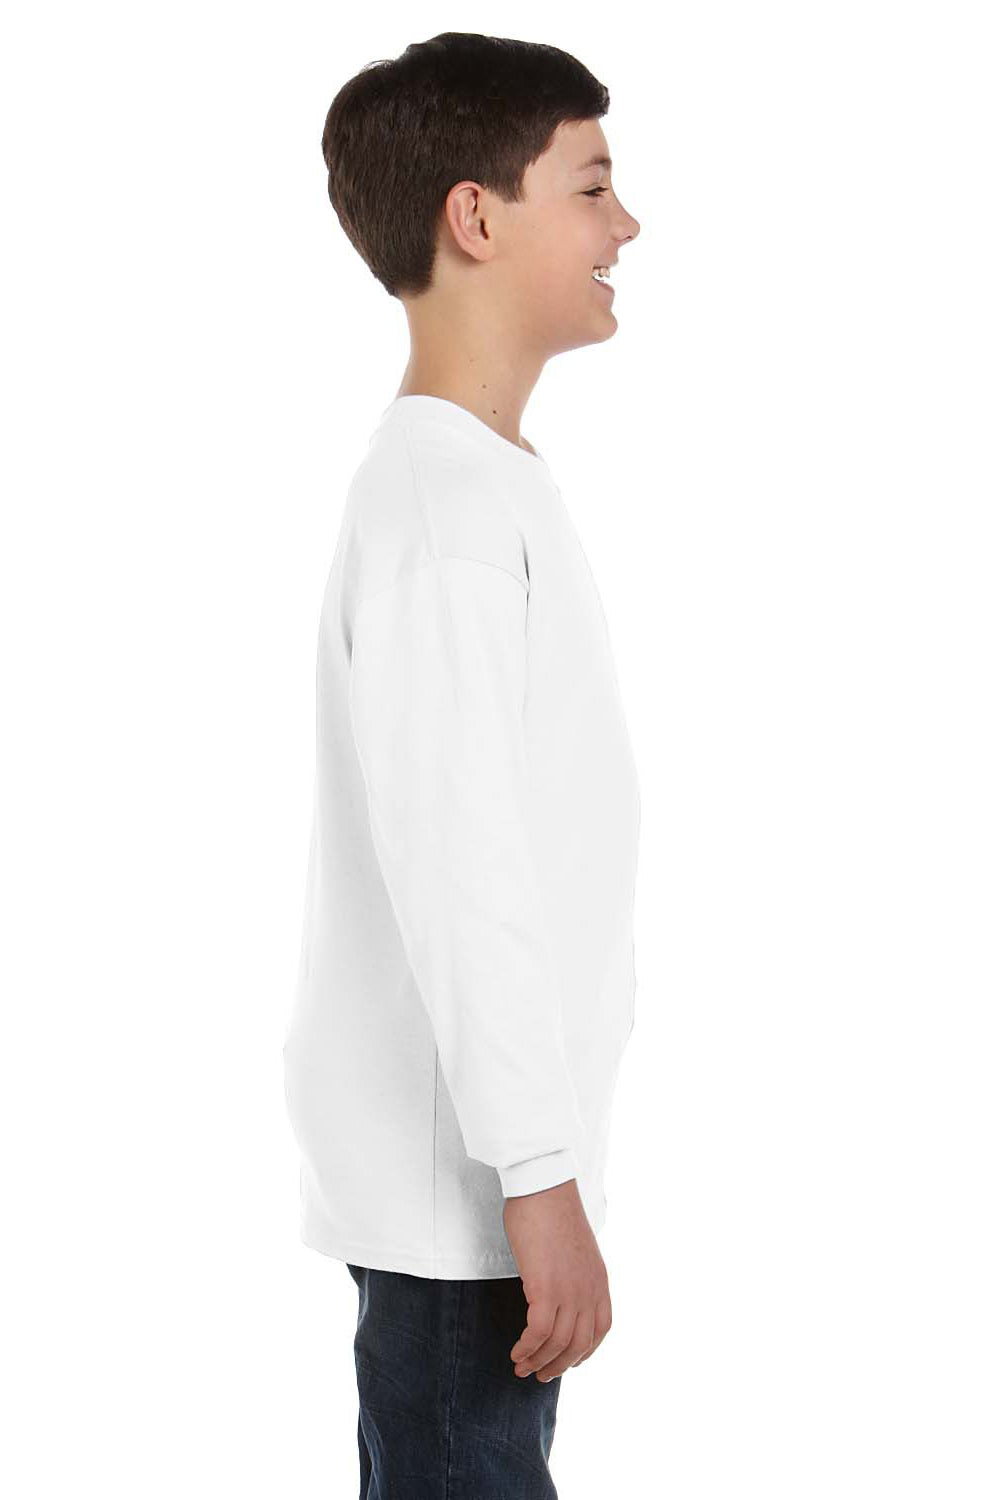 Gildan G540B Youth Long Sleeve Crewneck T-Shirt White Side